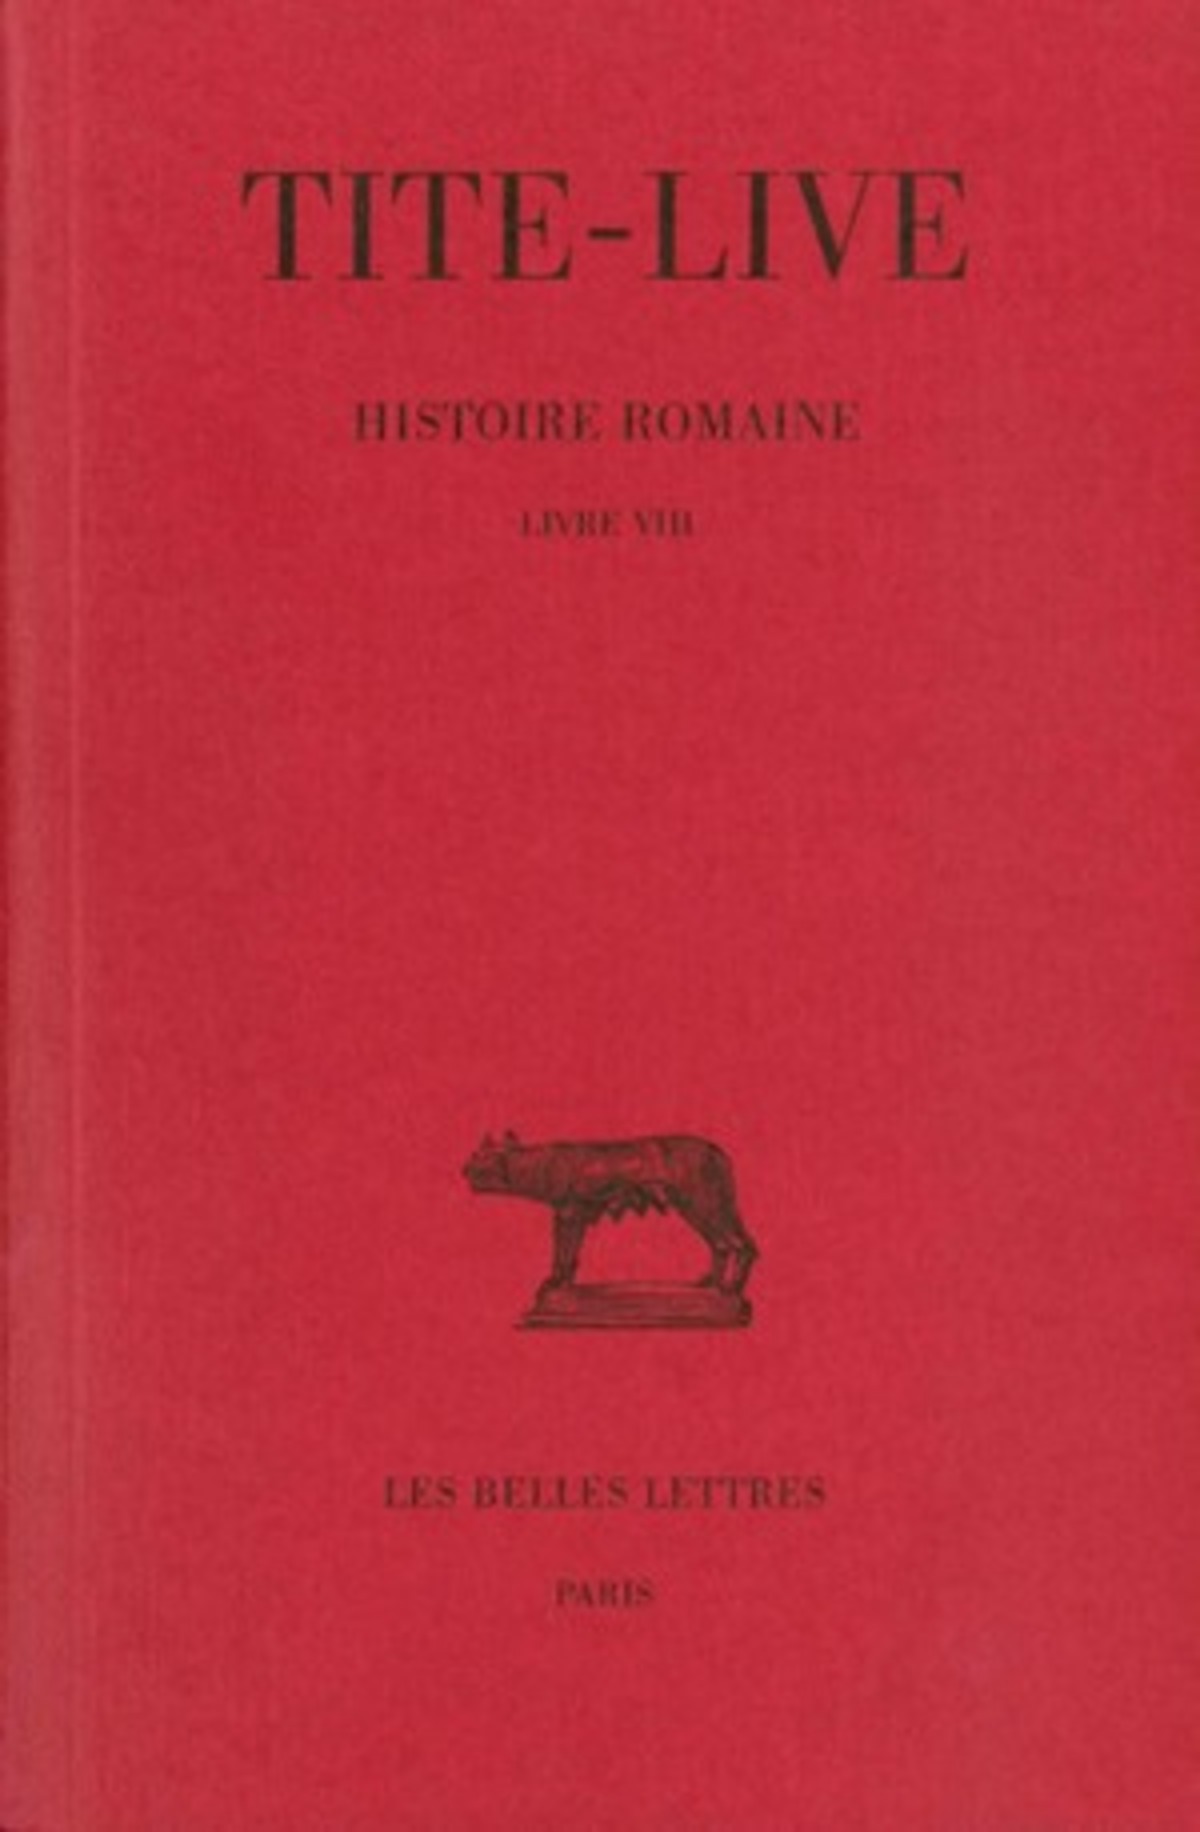 Histoire romaine. Tome VIII : Livre VIII